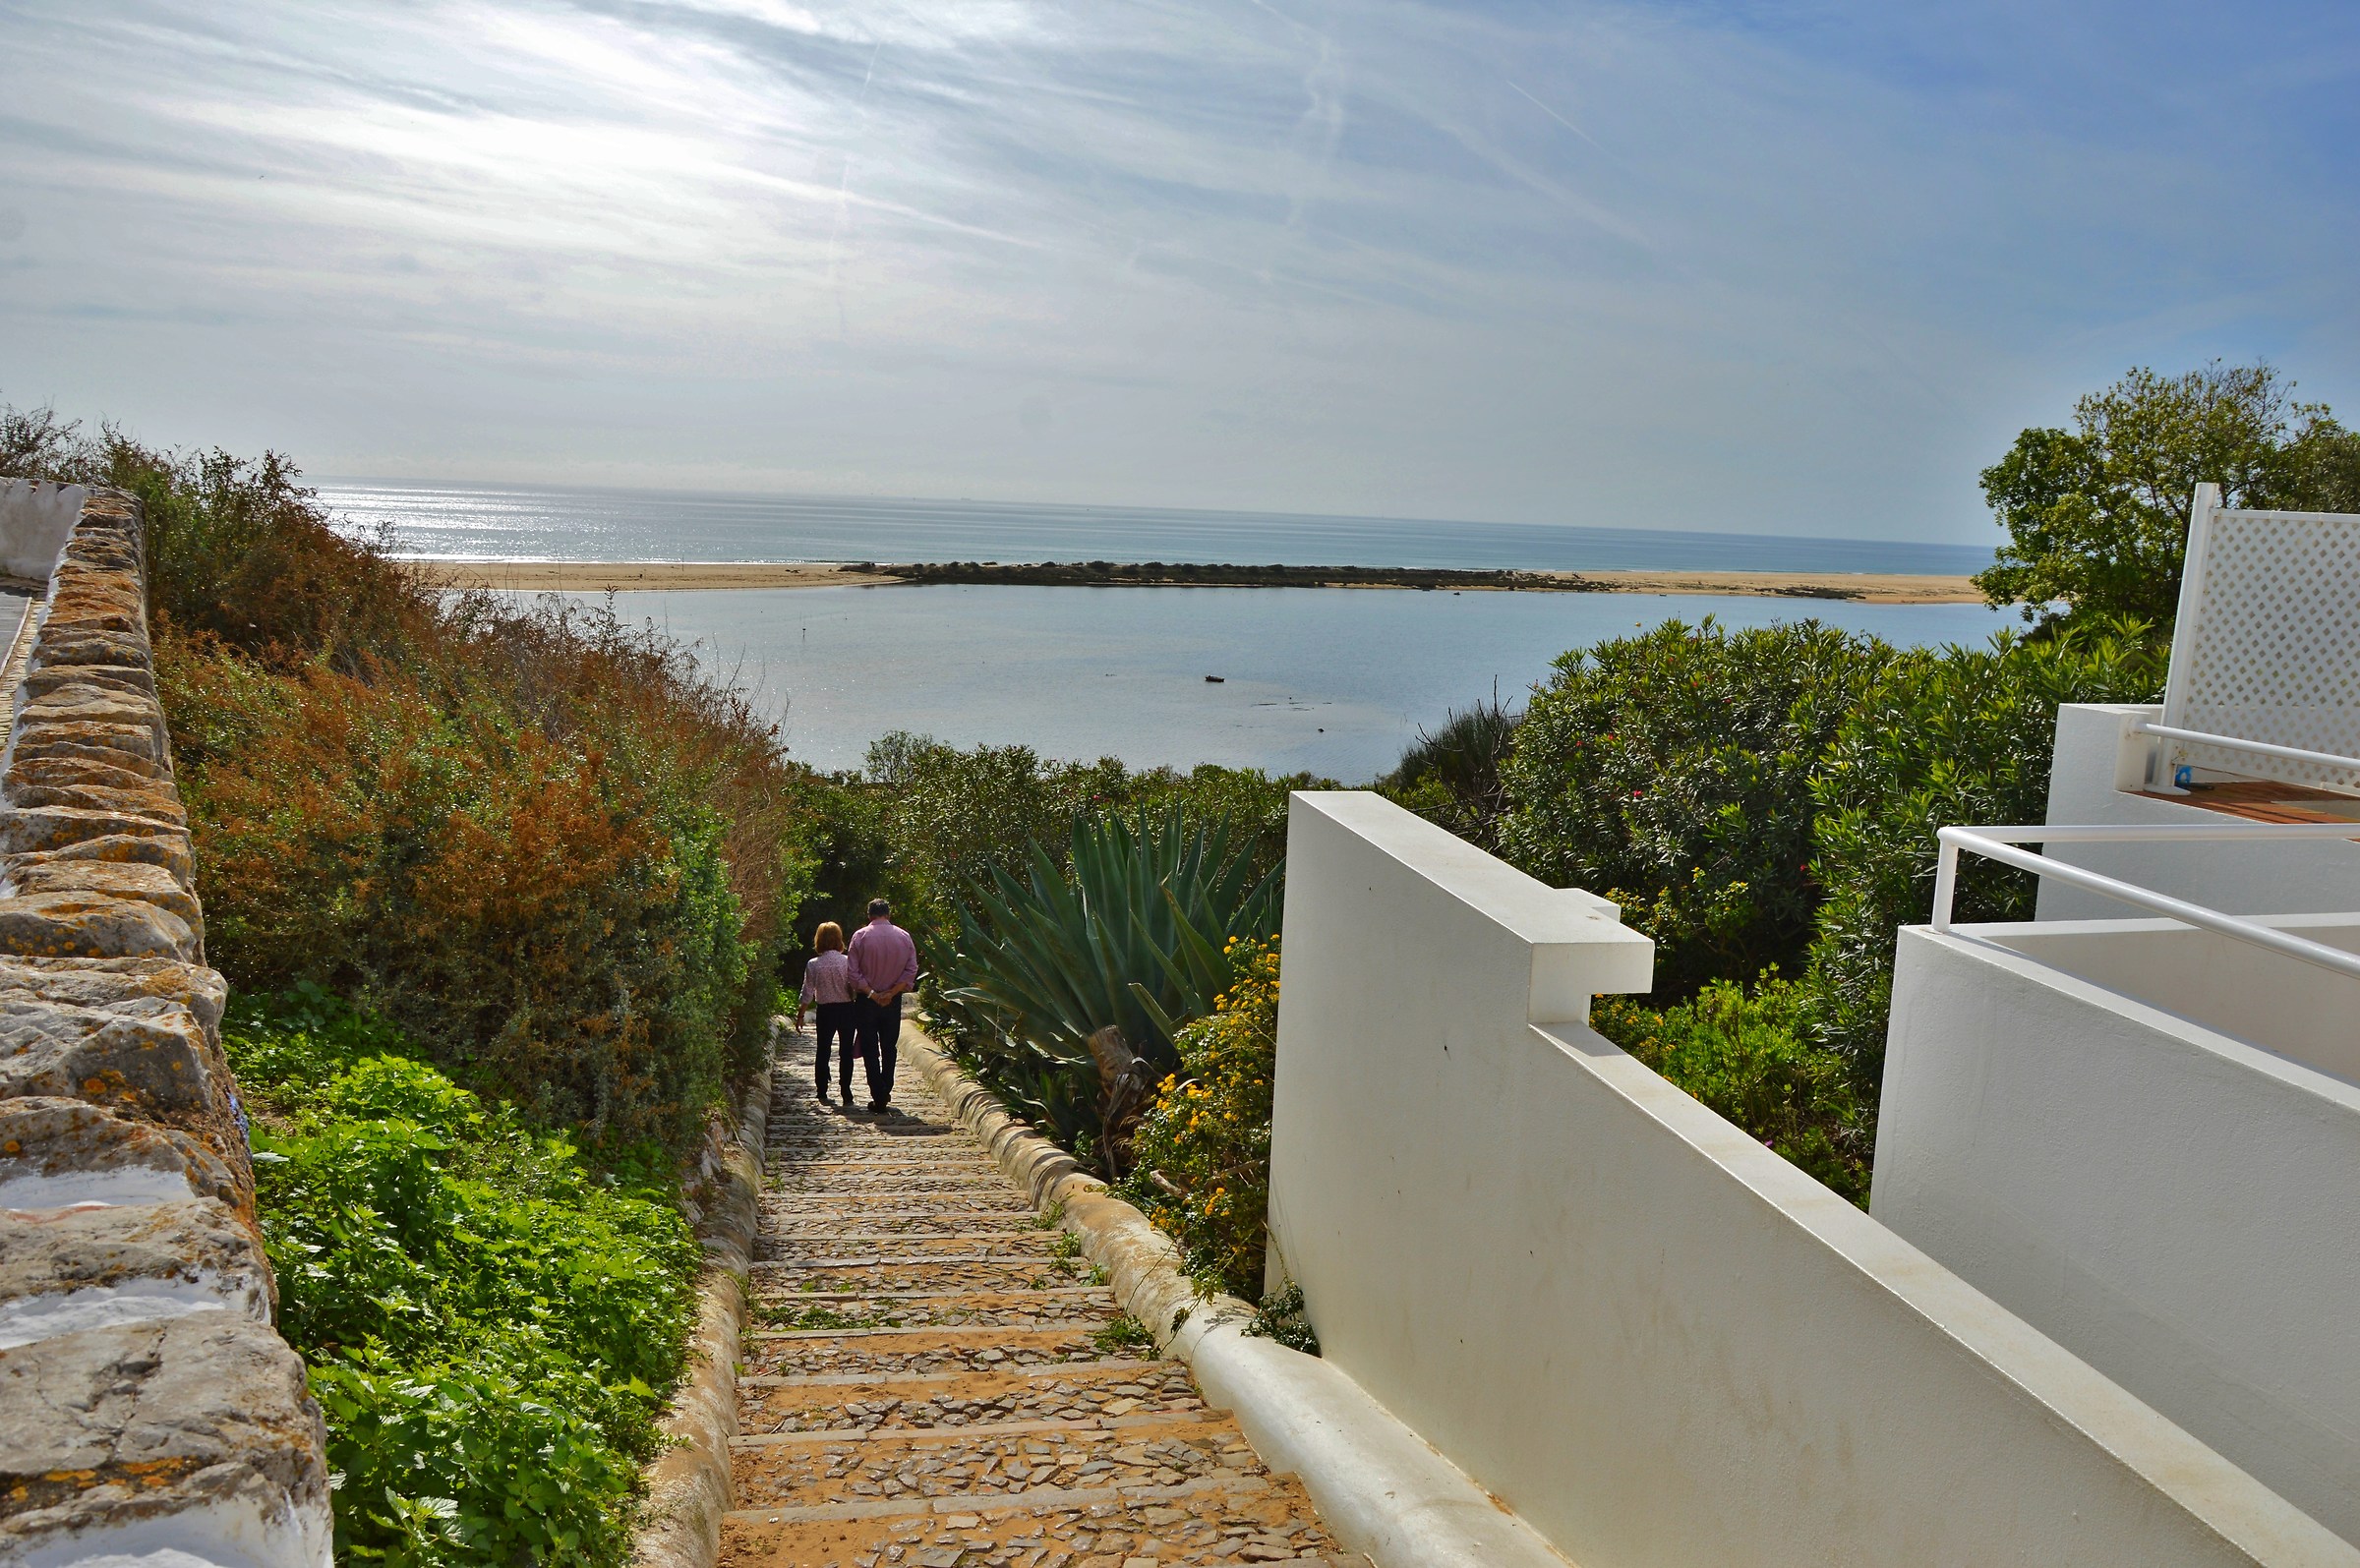 Vilanova de Cacela, typical village over the Algarve...